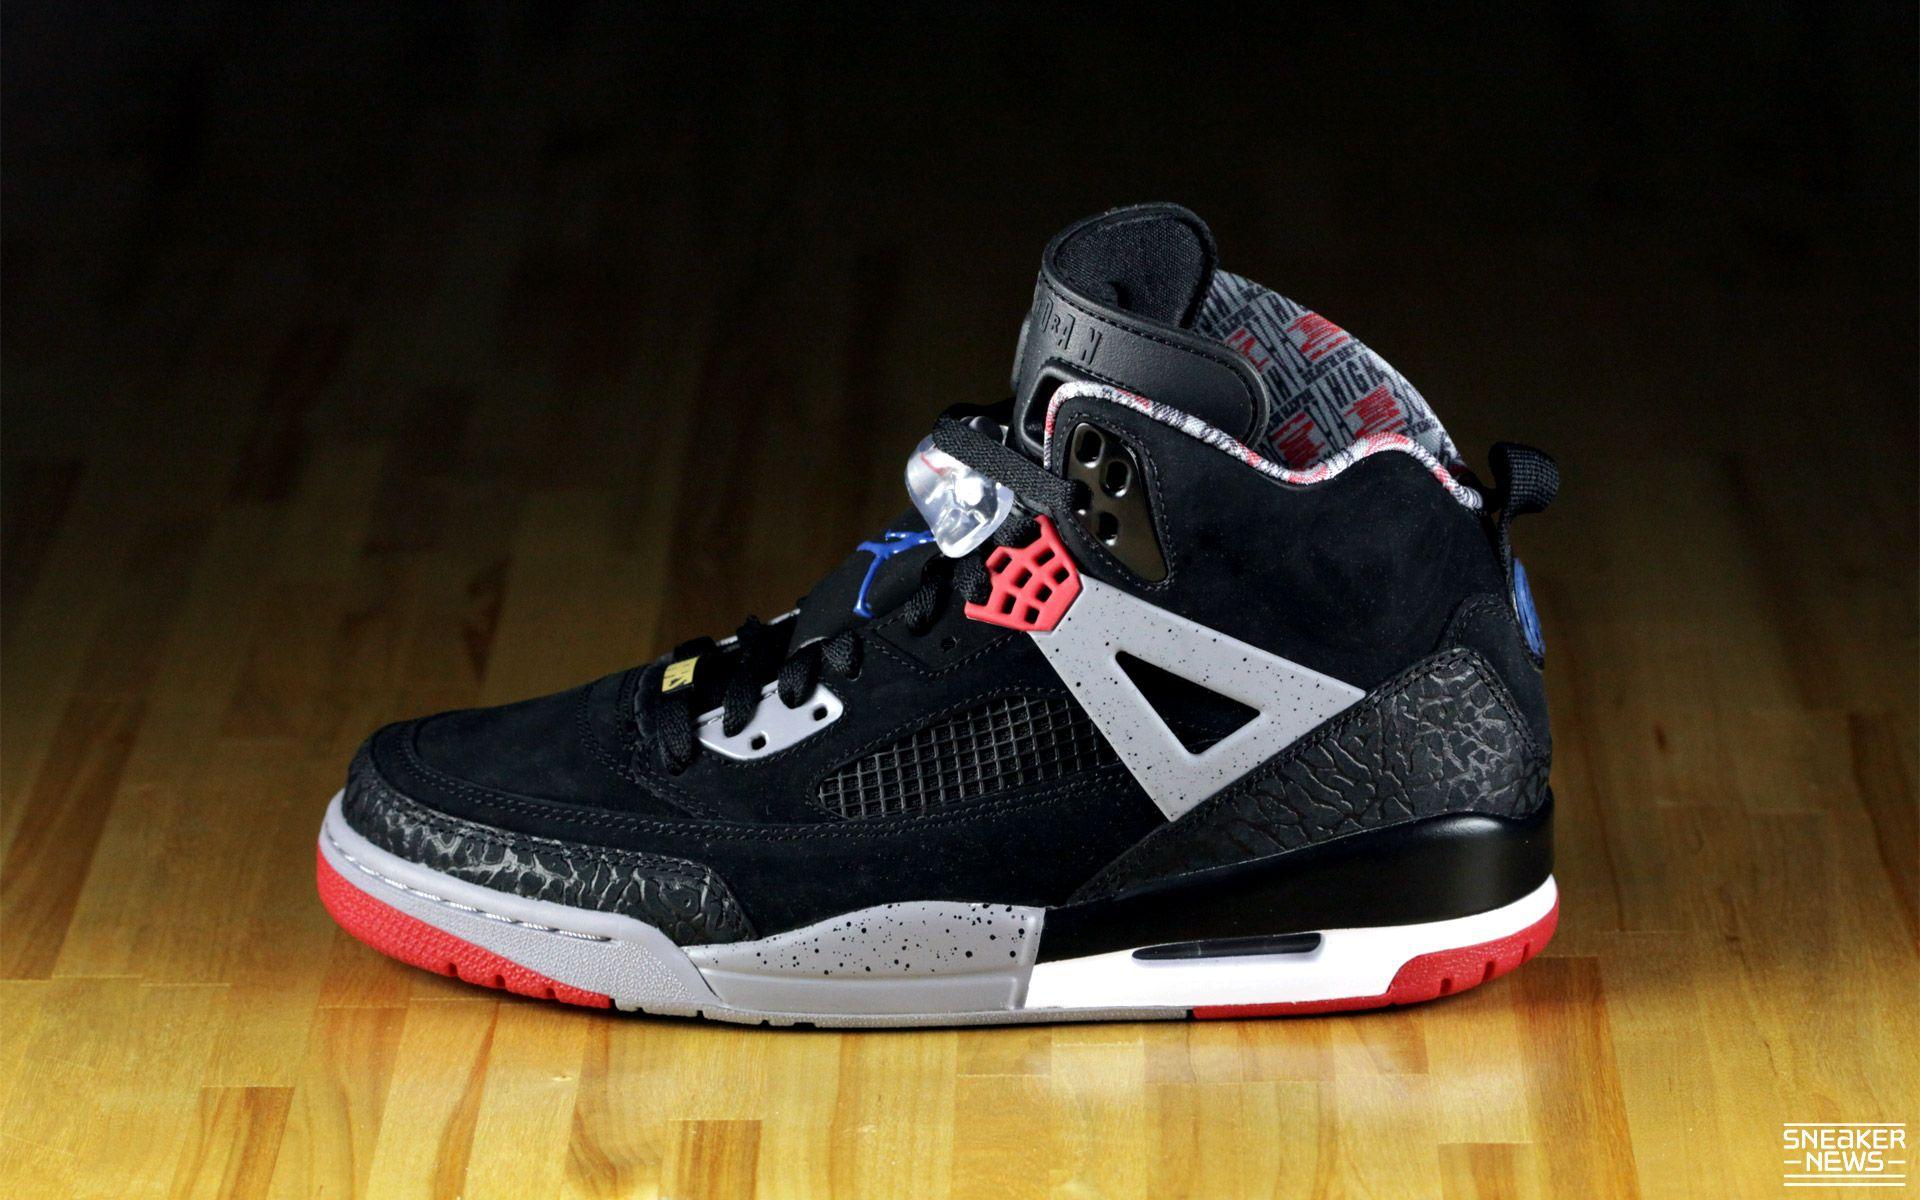 HD Air Jordan Shoes Background